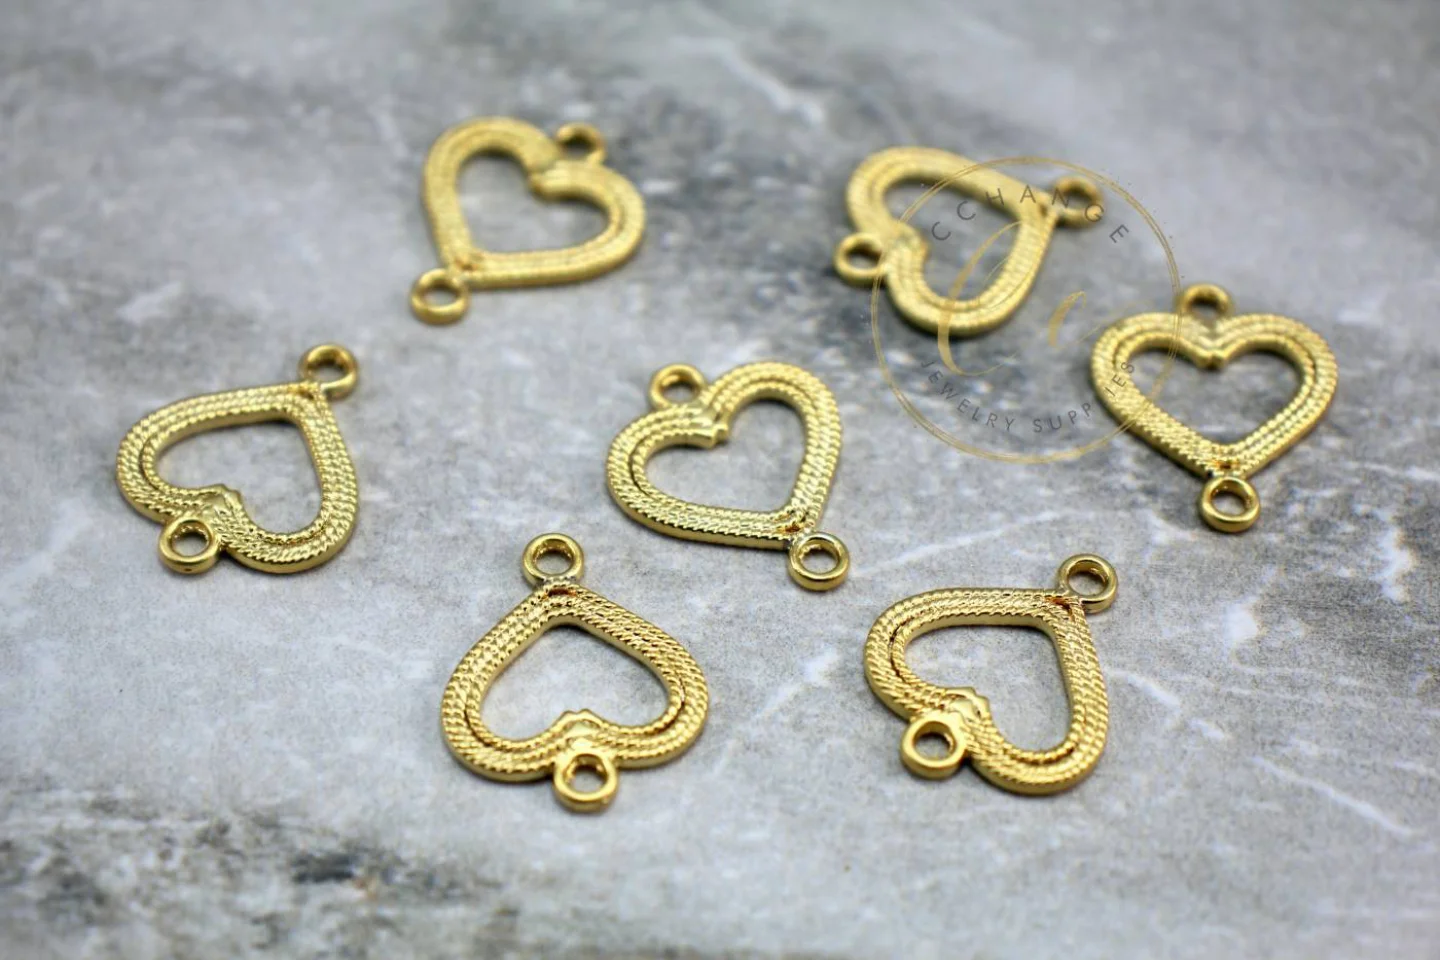 gold-metal-heart-shape-jewelry-charms.